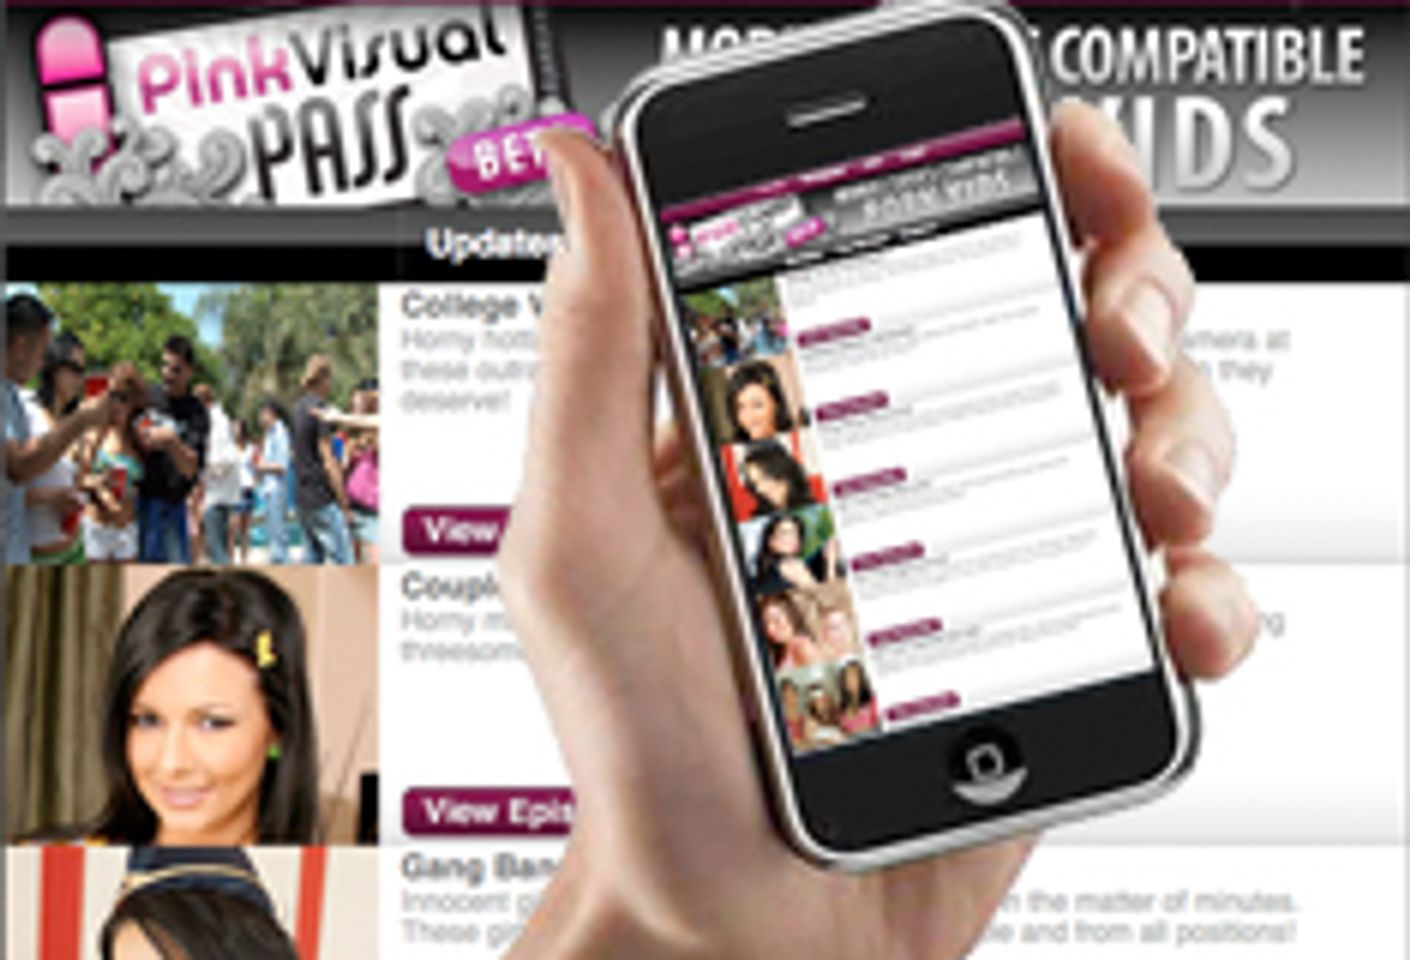 Pink Visual Launches Mobile Paysite, iPinkVisualPass.com